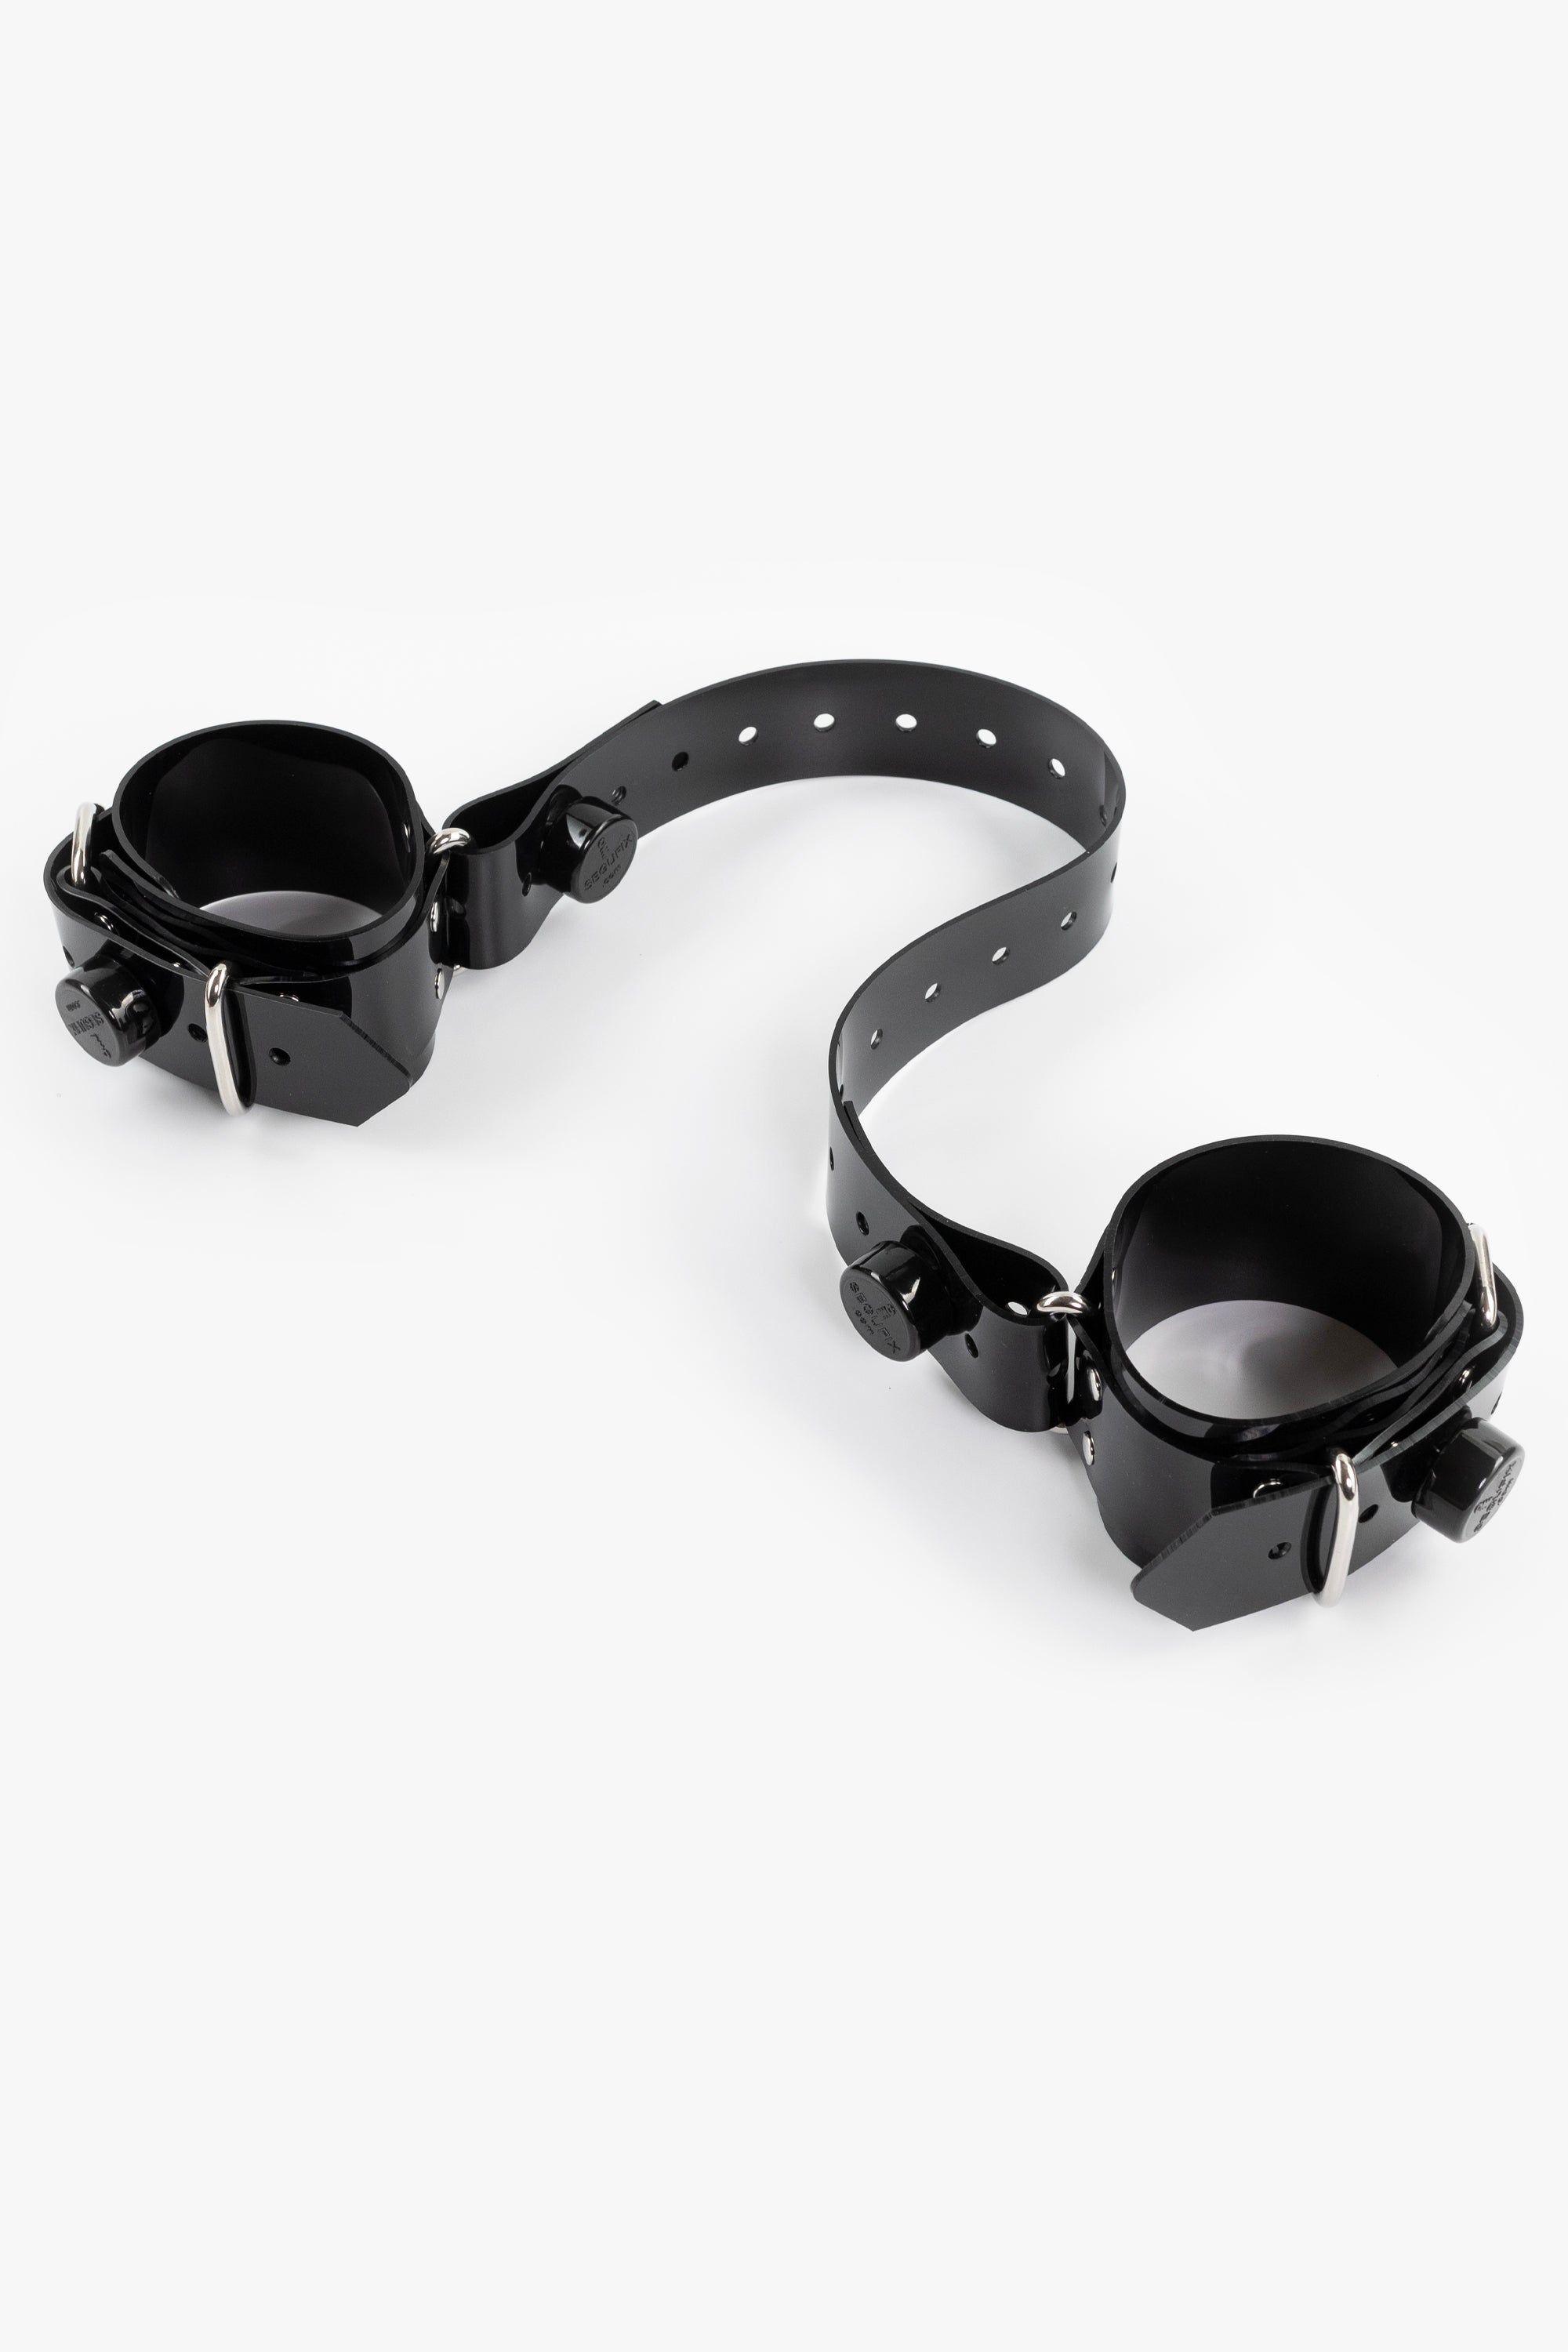 Lockable Segufix ankle cuffs, black/chrome